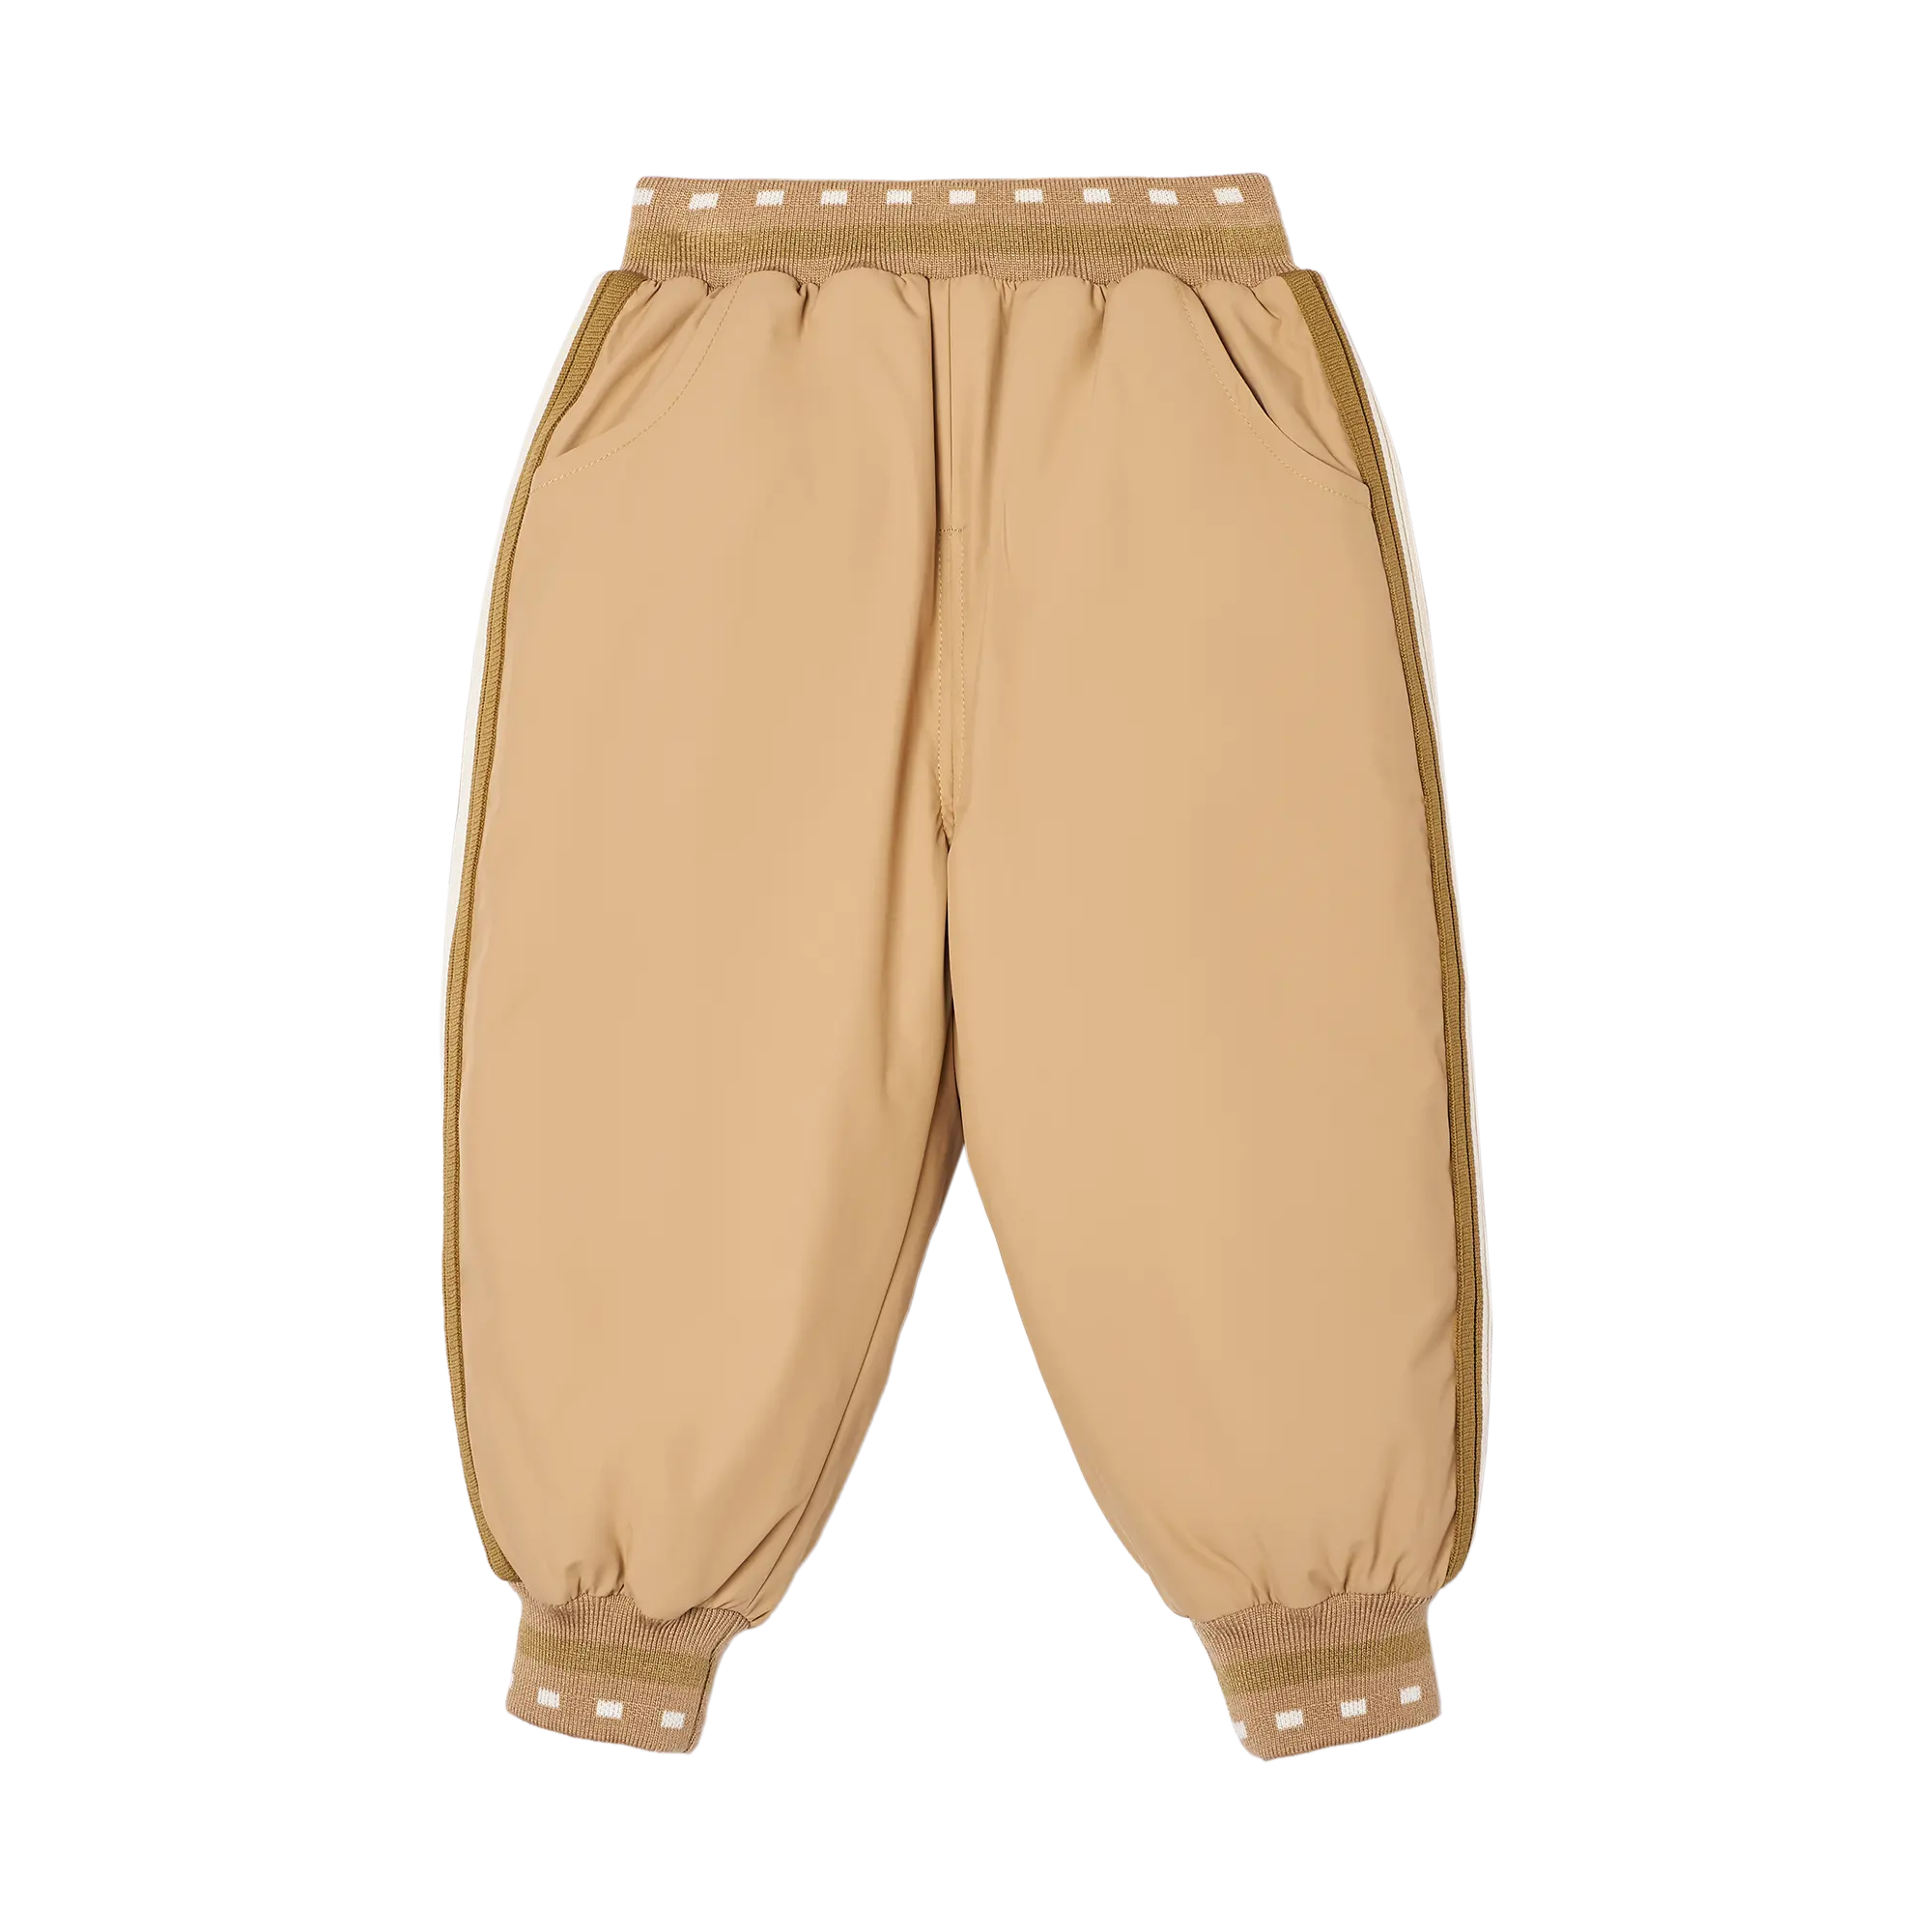 1-7 ans Filles pantalon en duvet de canard blanc pantalon en duvet pantalon en tricot coupe-vent